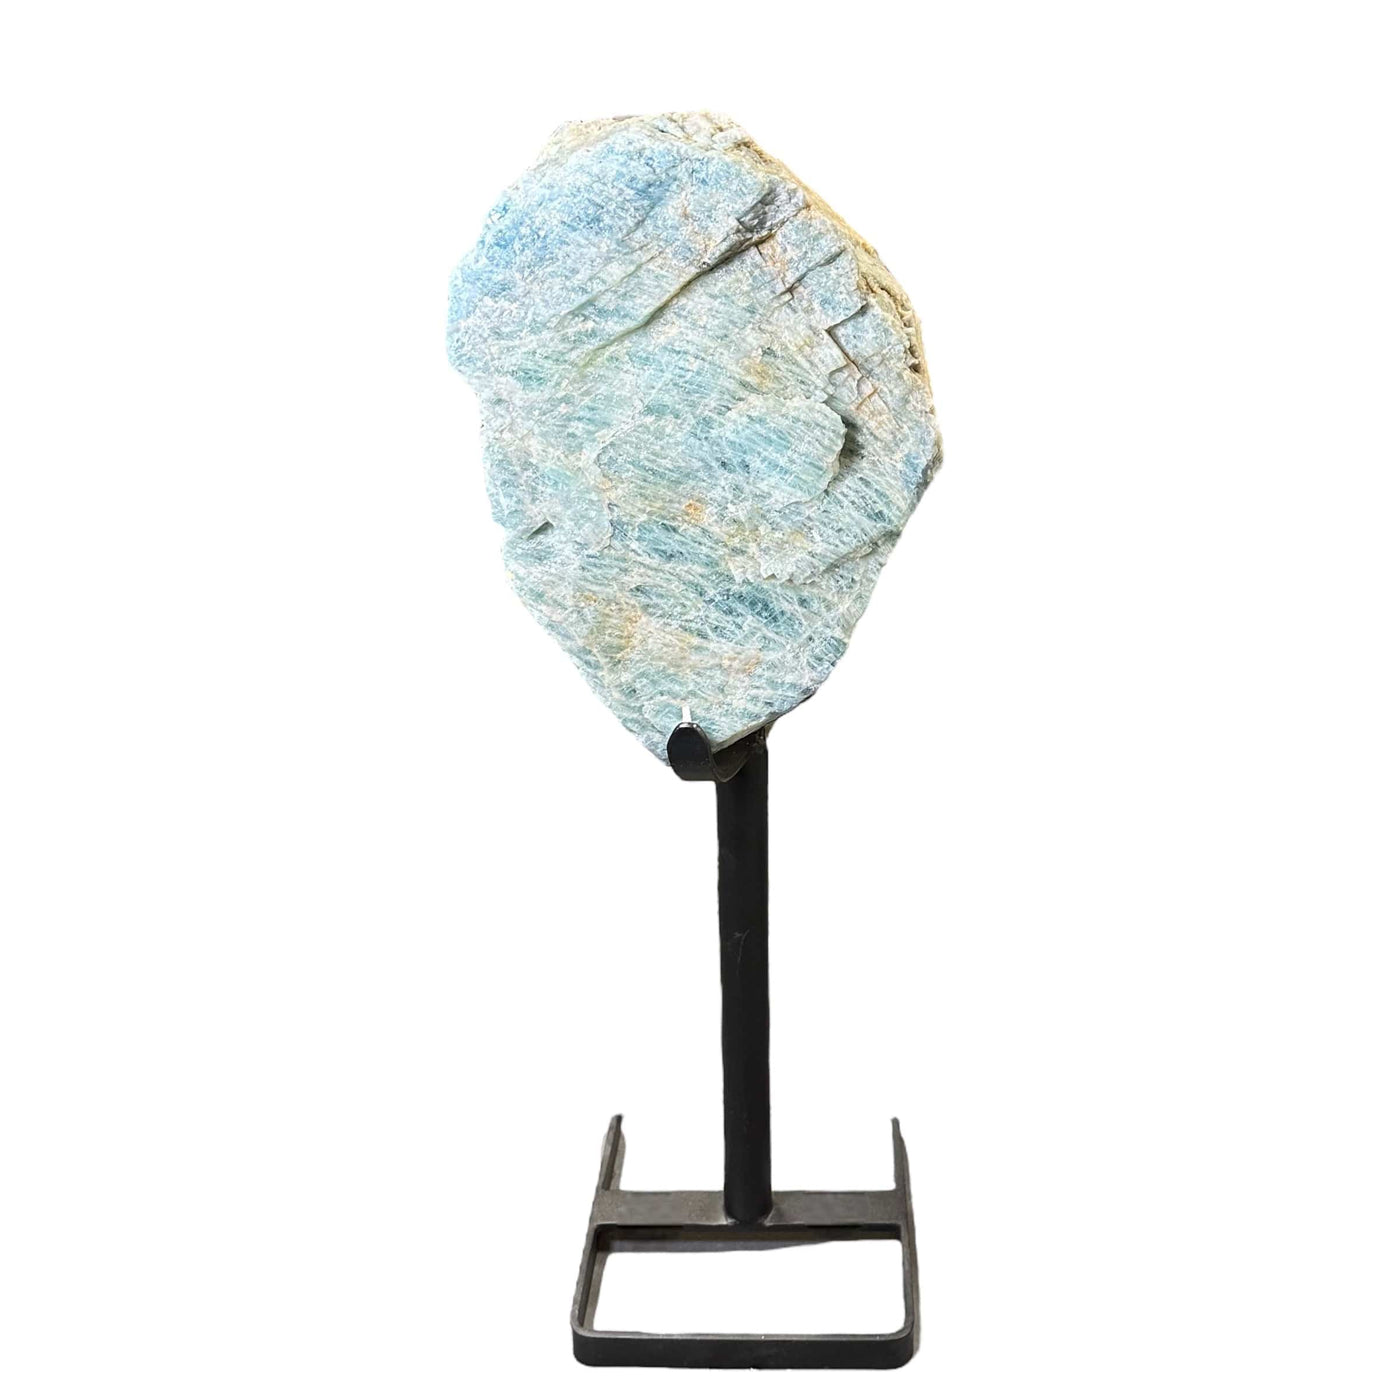 Rough Aquamarine on Metal Stand - Large Crystal Decor -